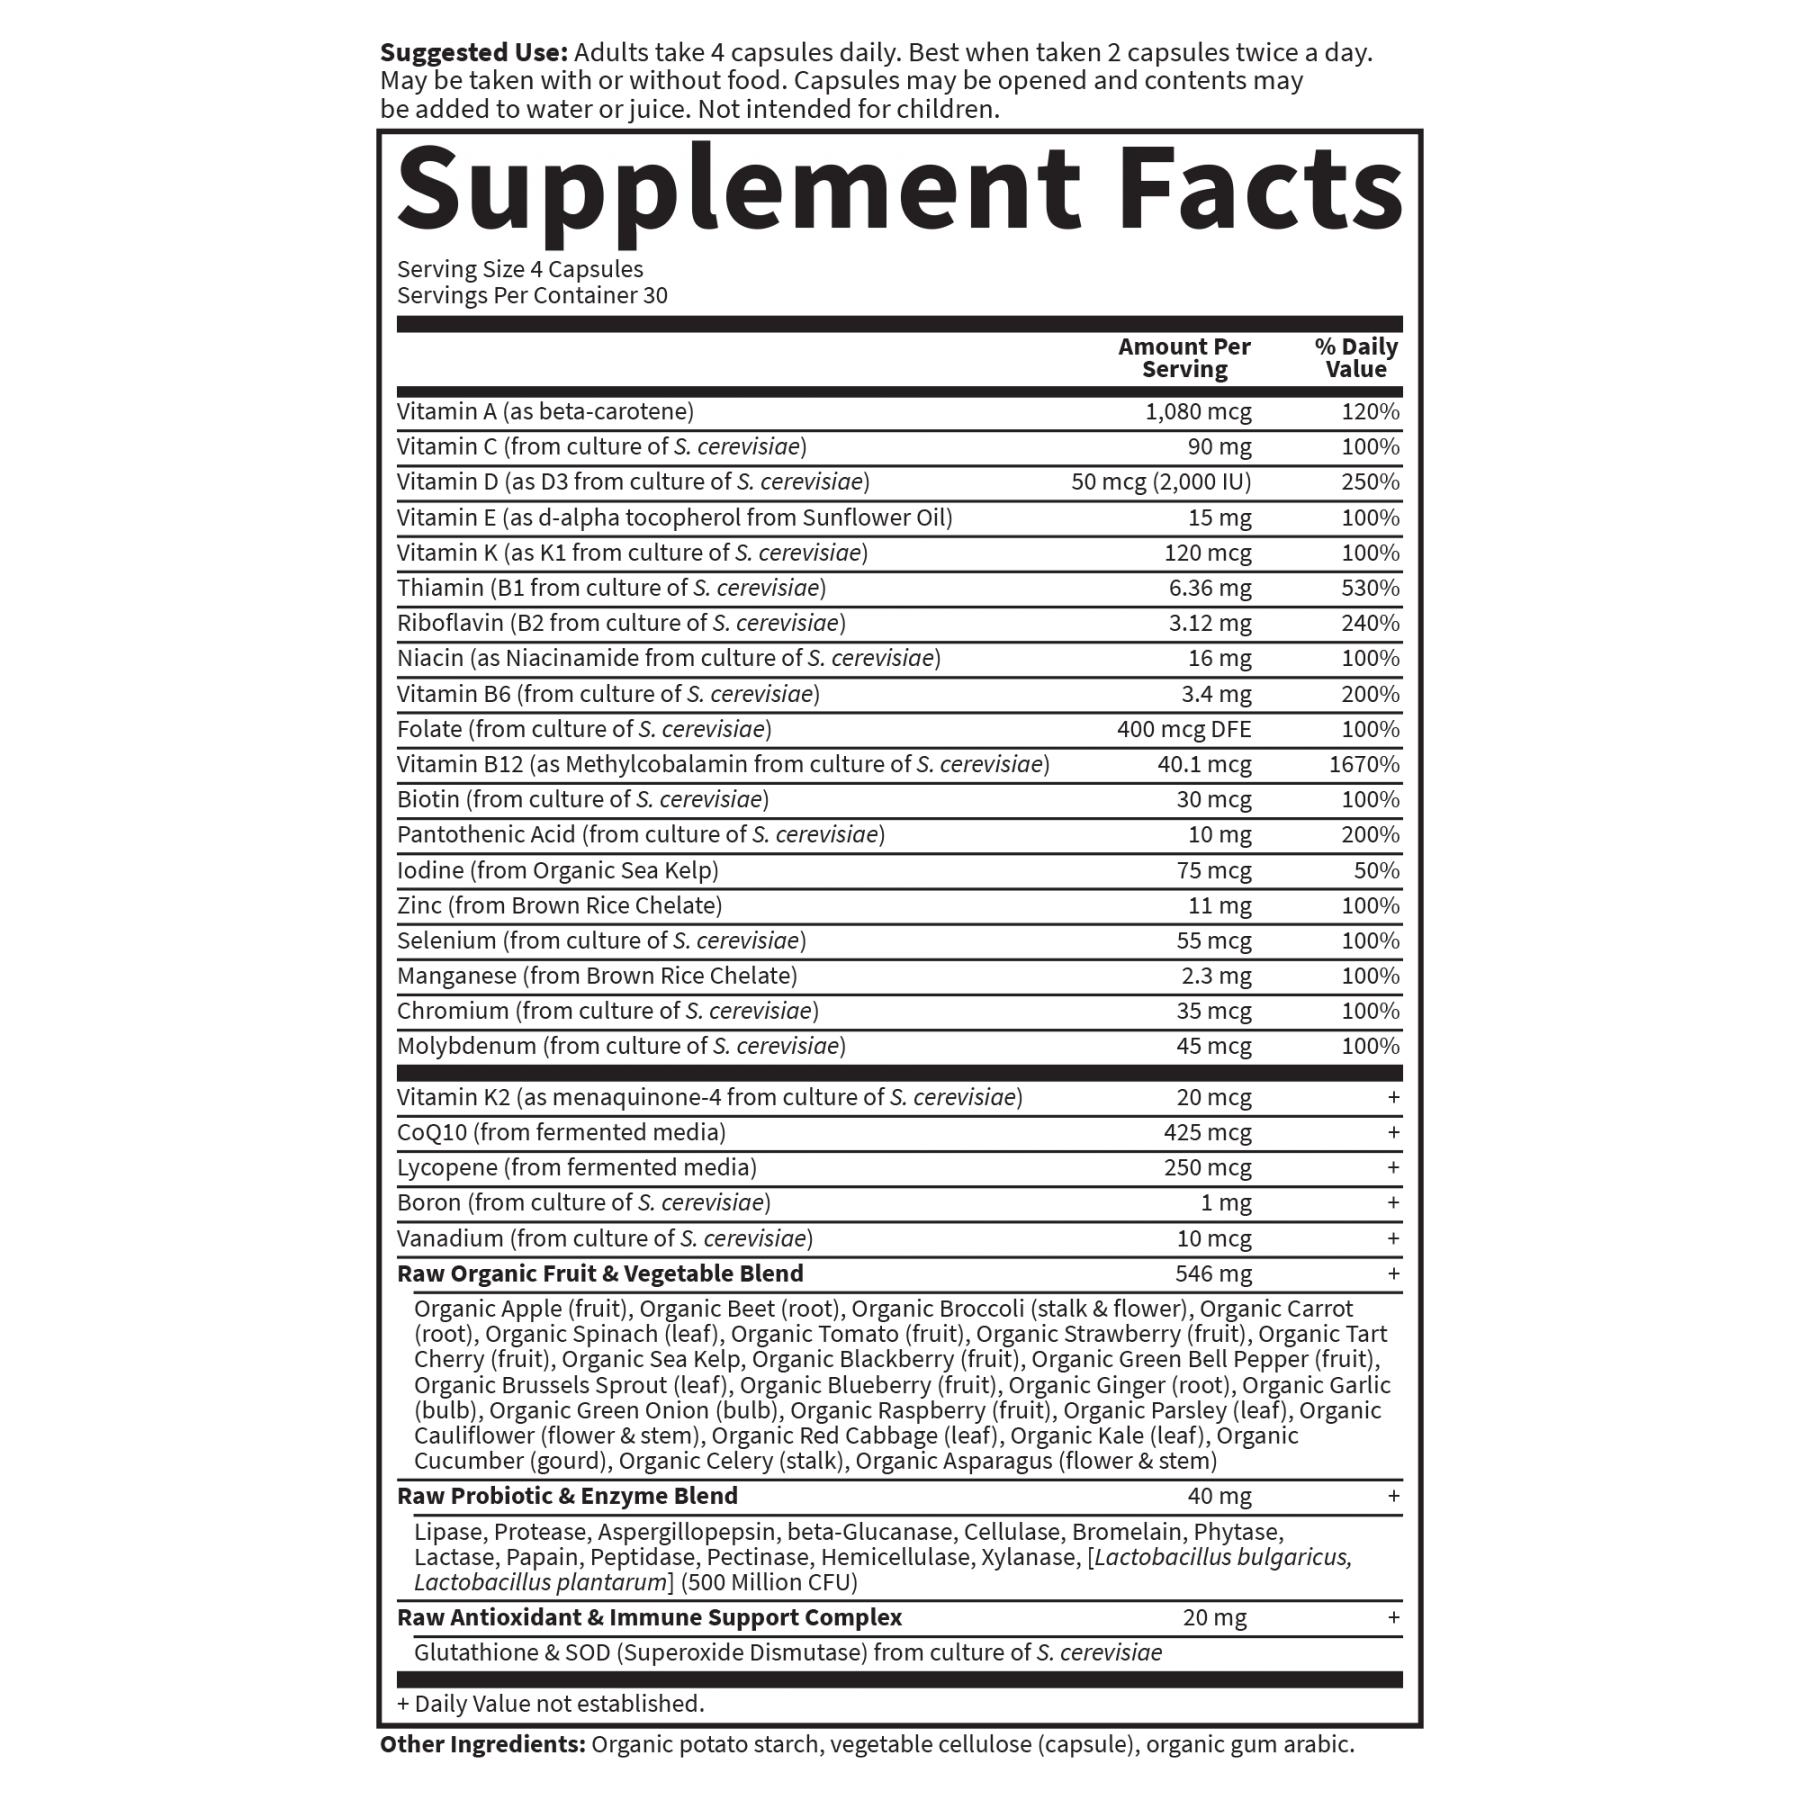 Tabela Nutricional Vitamin Code 50 & Wiser Men